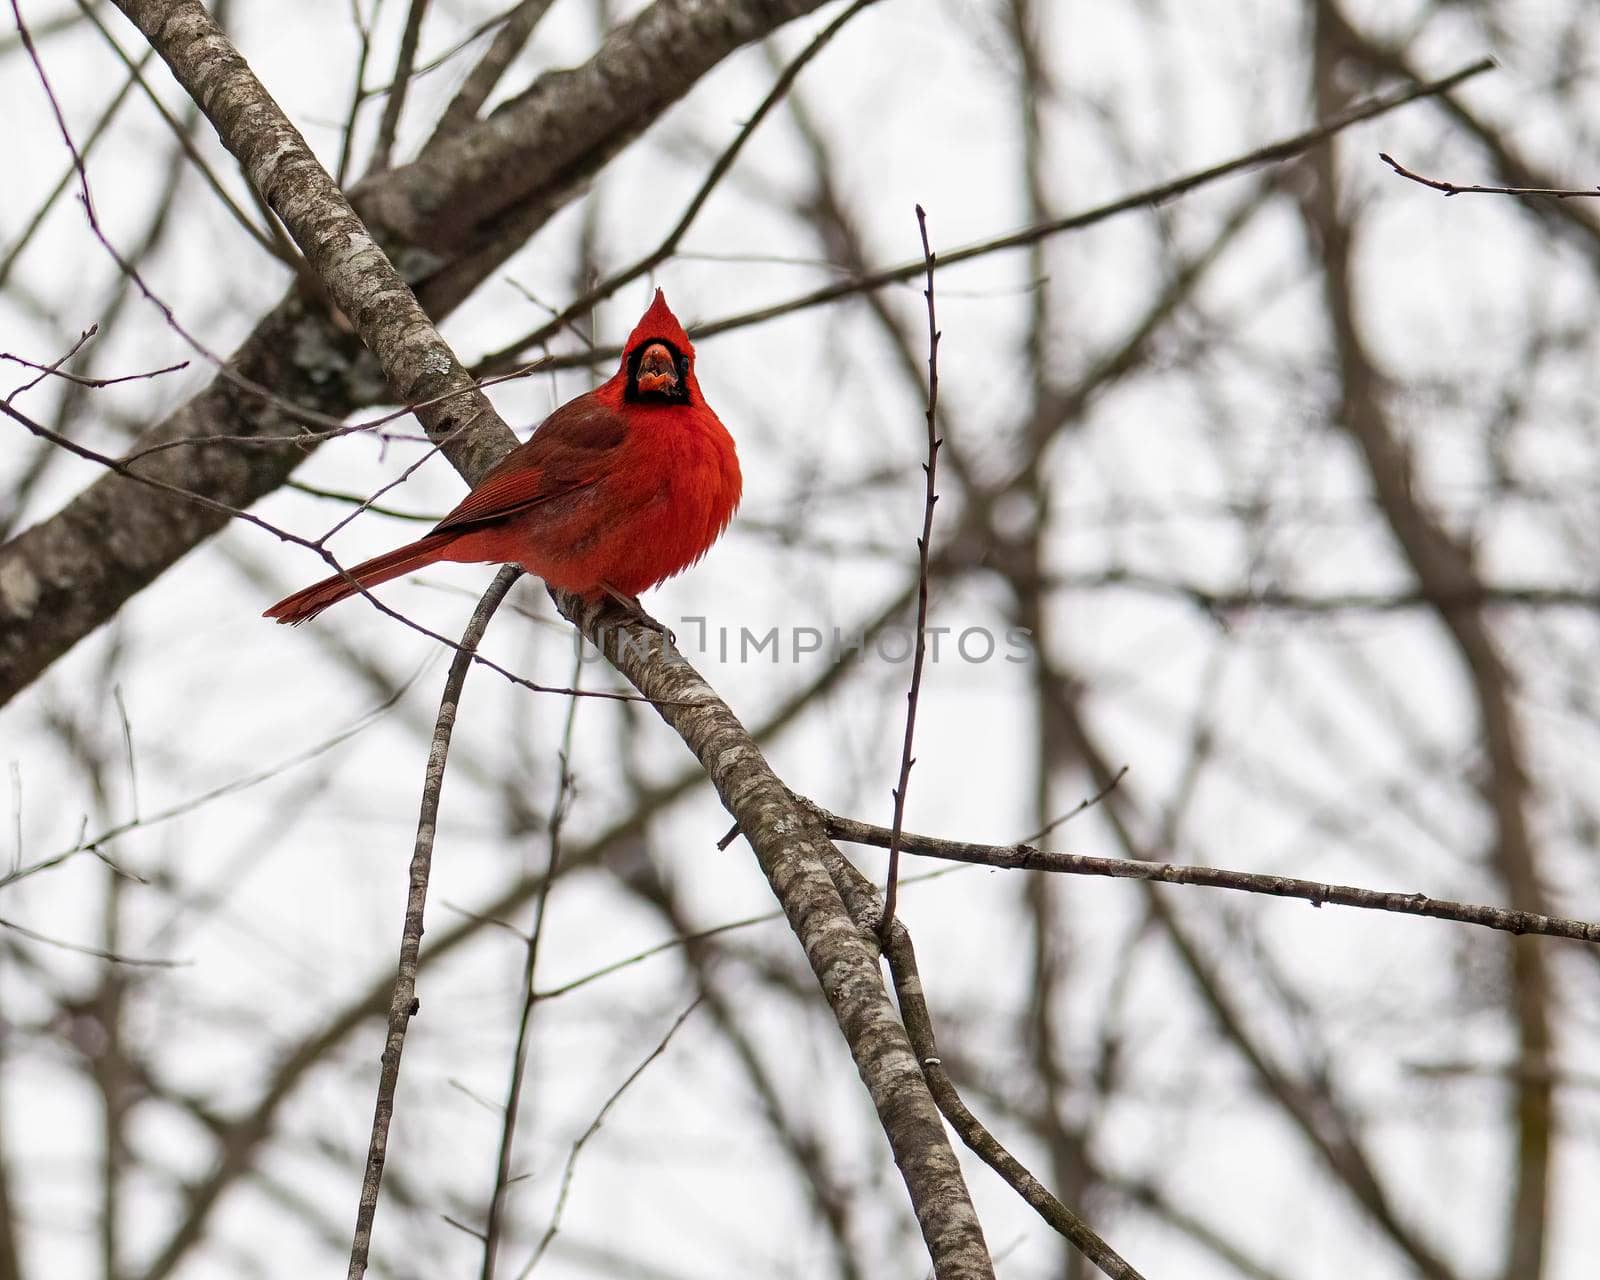 Male cardinal bird perched on a tree limb looking at camera.